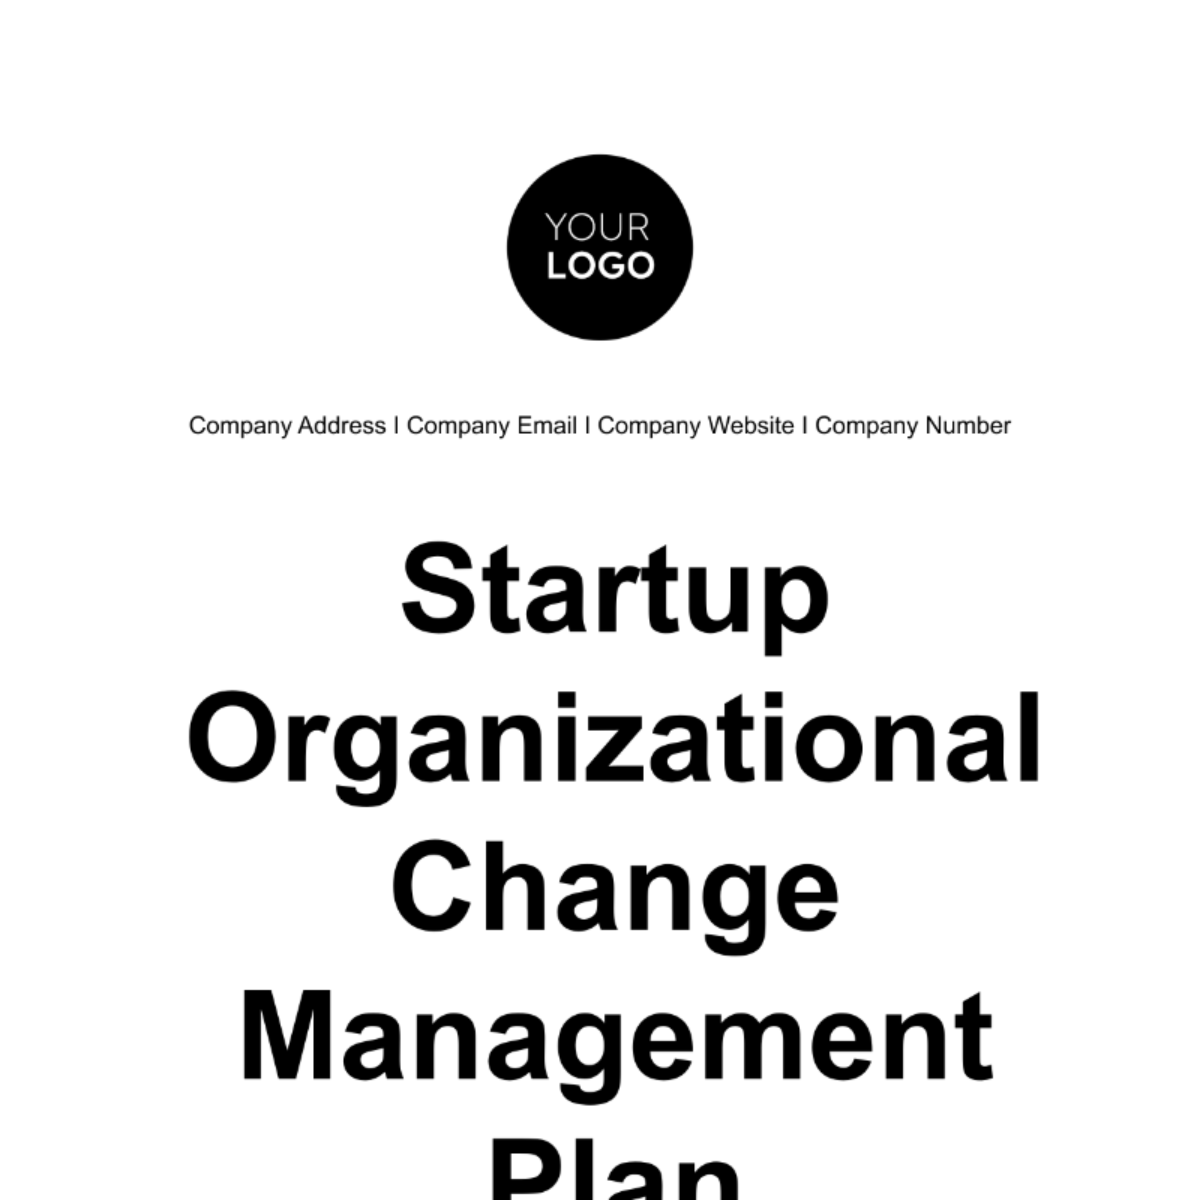 Startup Organizational Change Management Plan Template